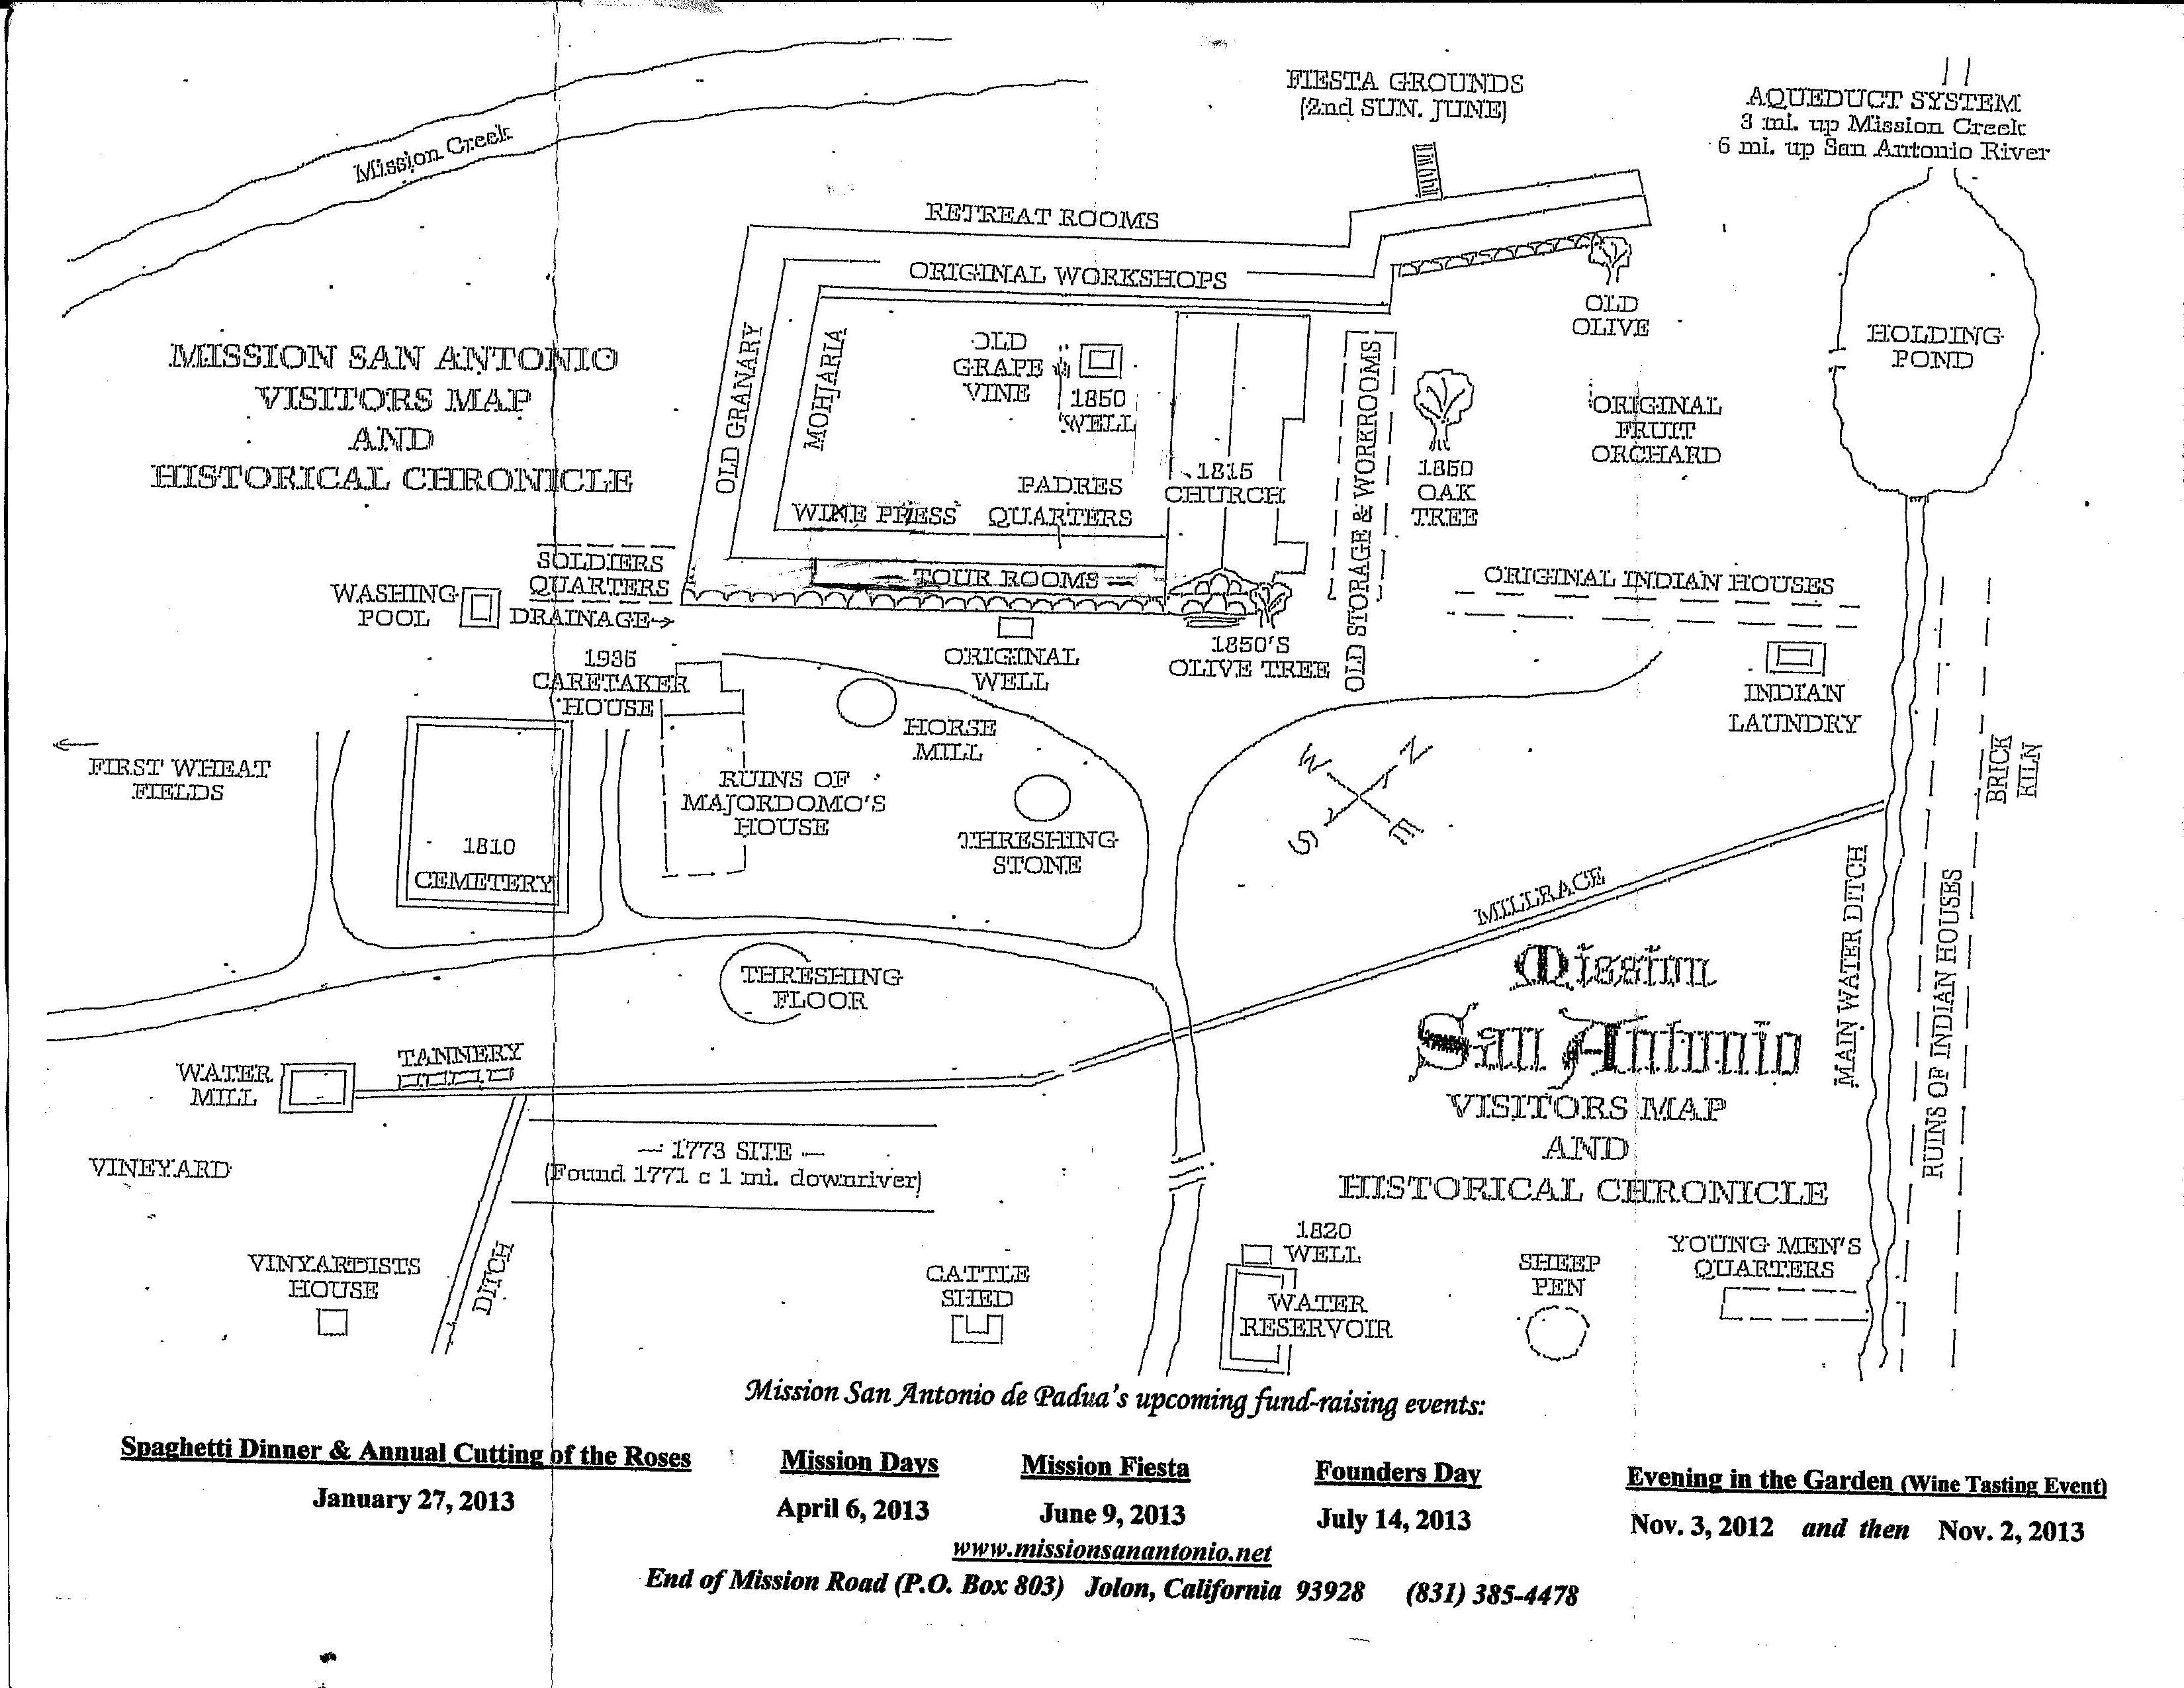 Photo Diagram of the Grounds of Misión San Antonio de Padua